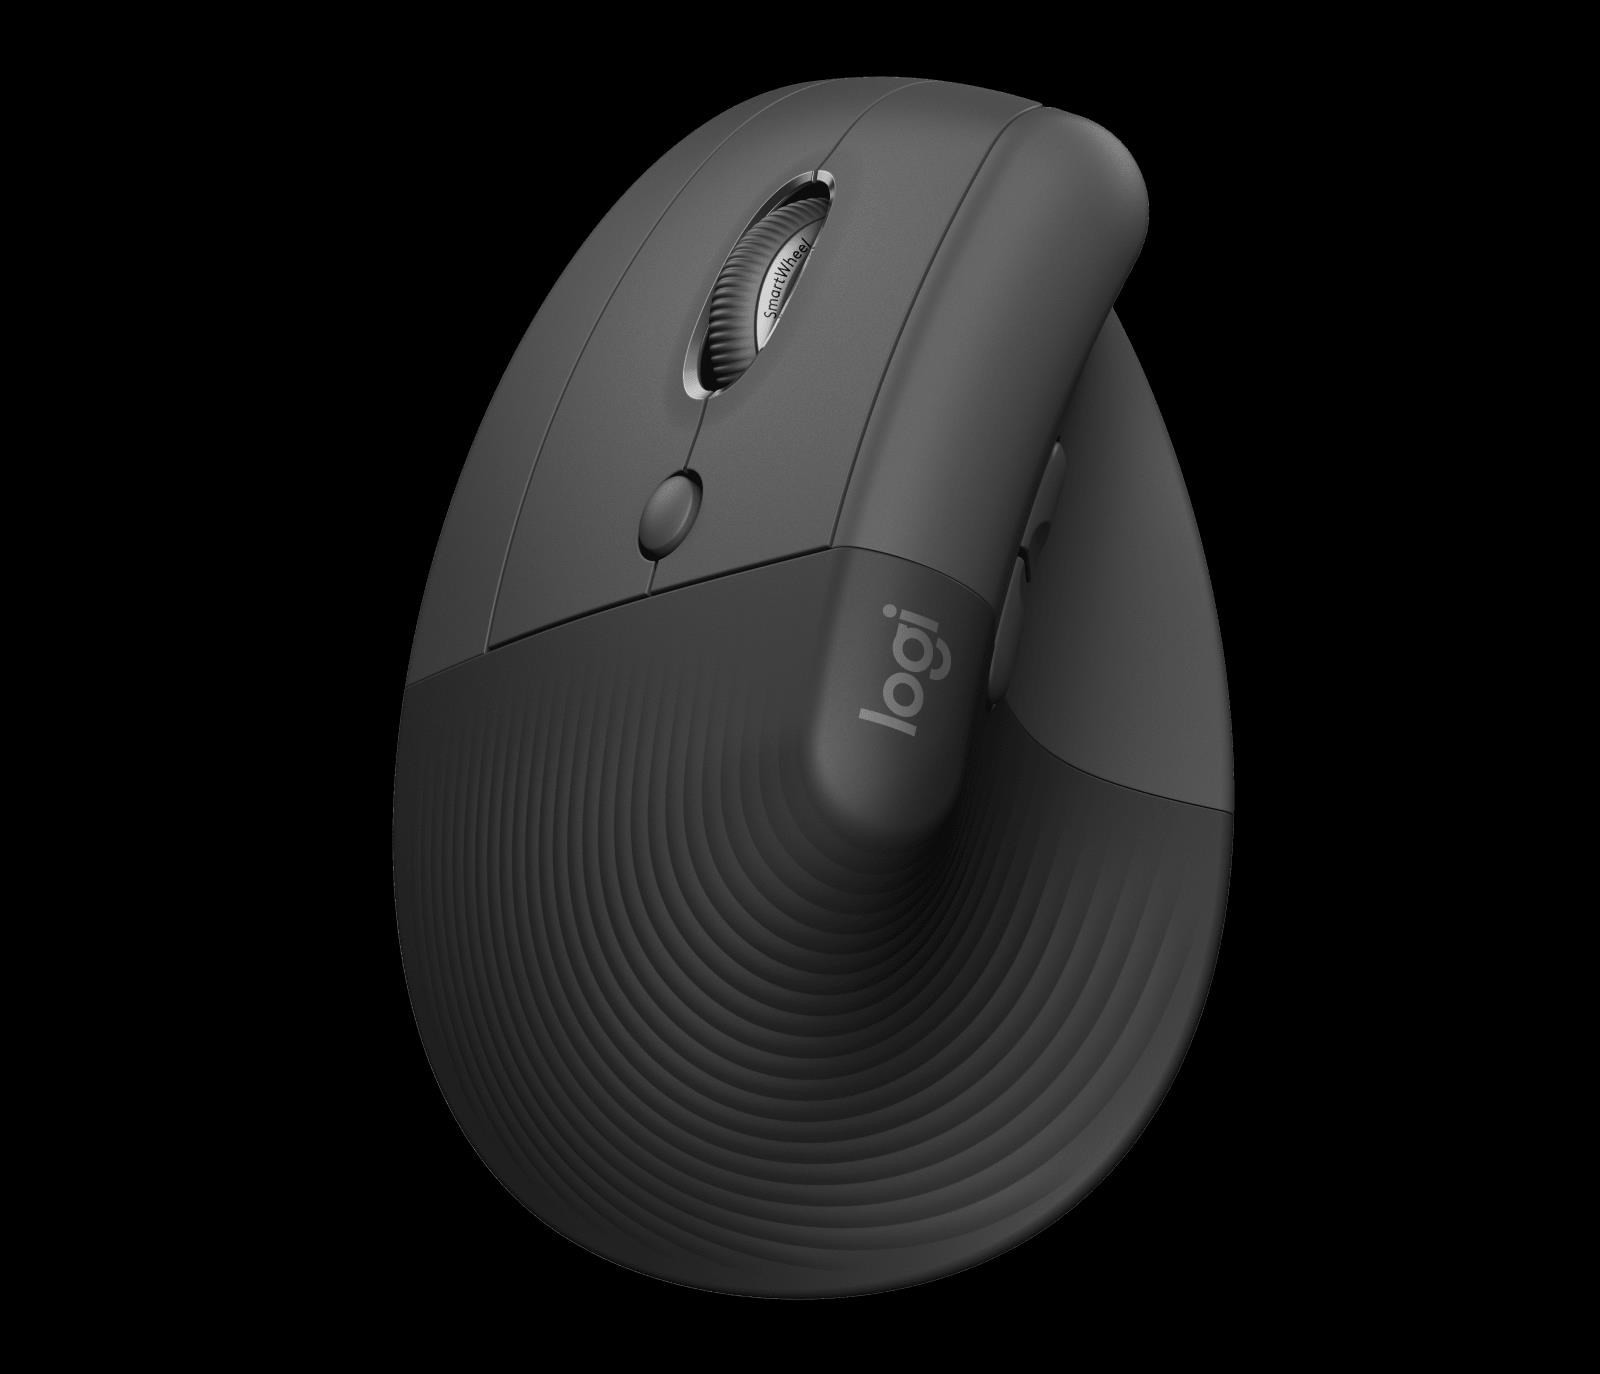 Logitech Wireless Mouse Lift for Business Left, graphite / black